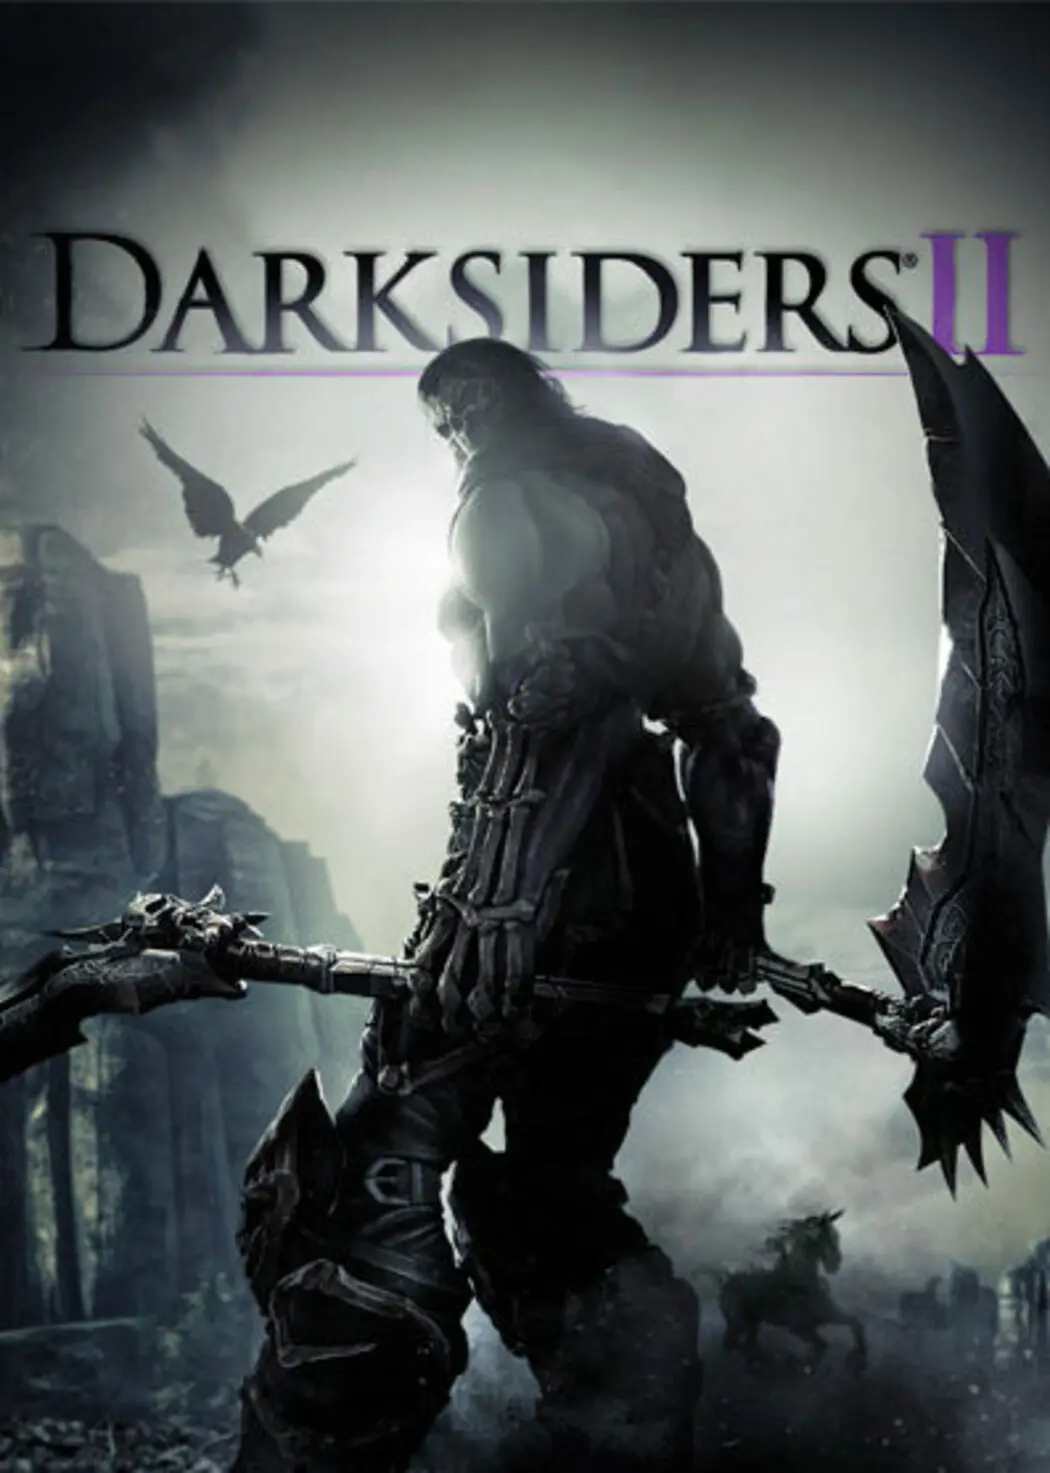 Darksiders 2 - Season Pass DLC (EU) (PC) - Steam - Digital Code